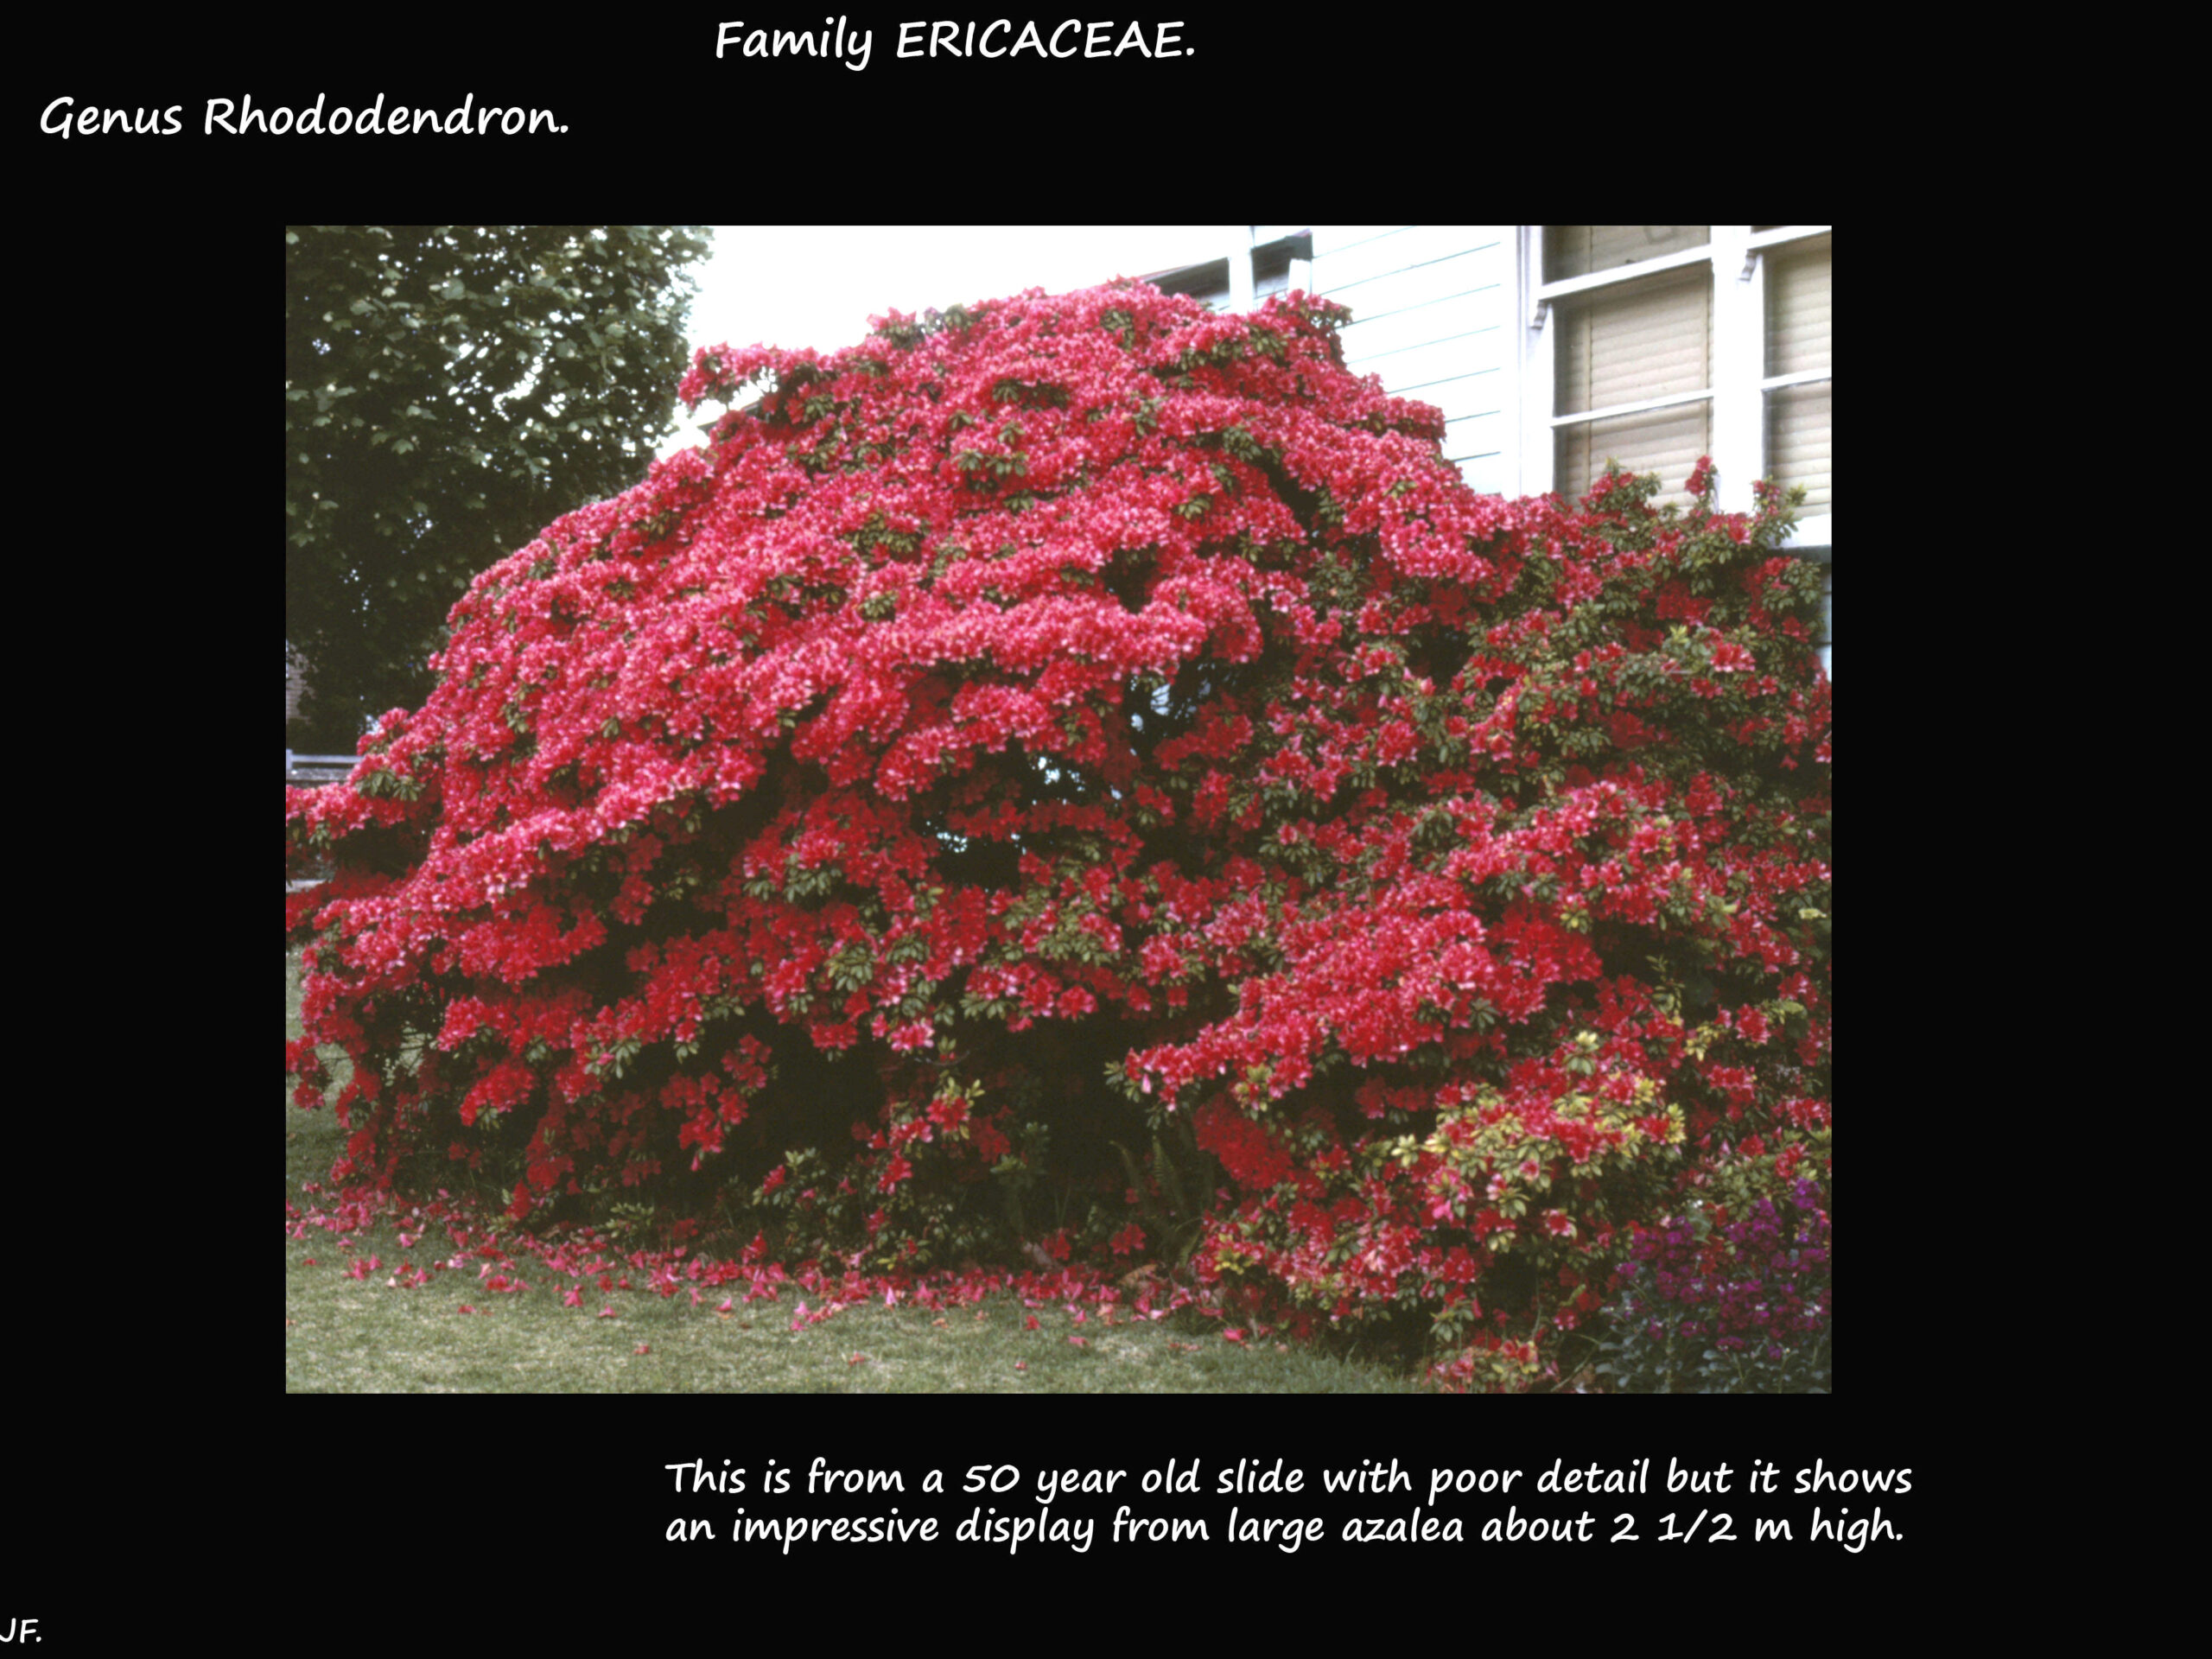 9 A huge red azalea shrub